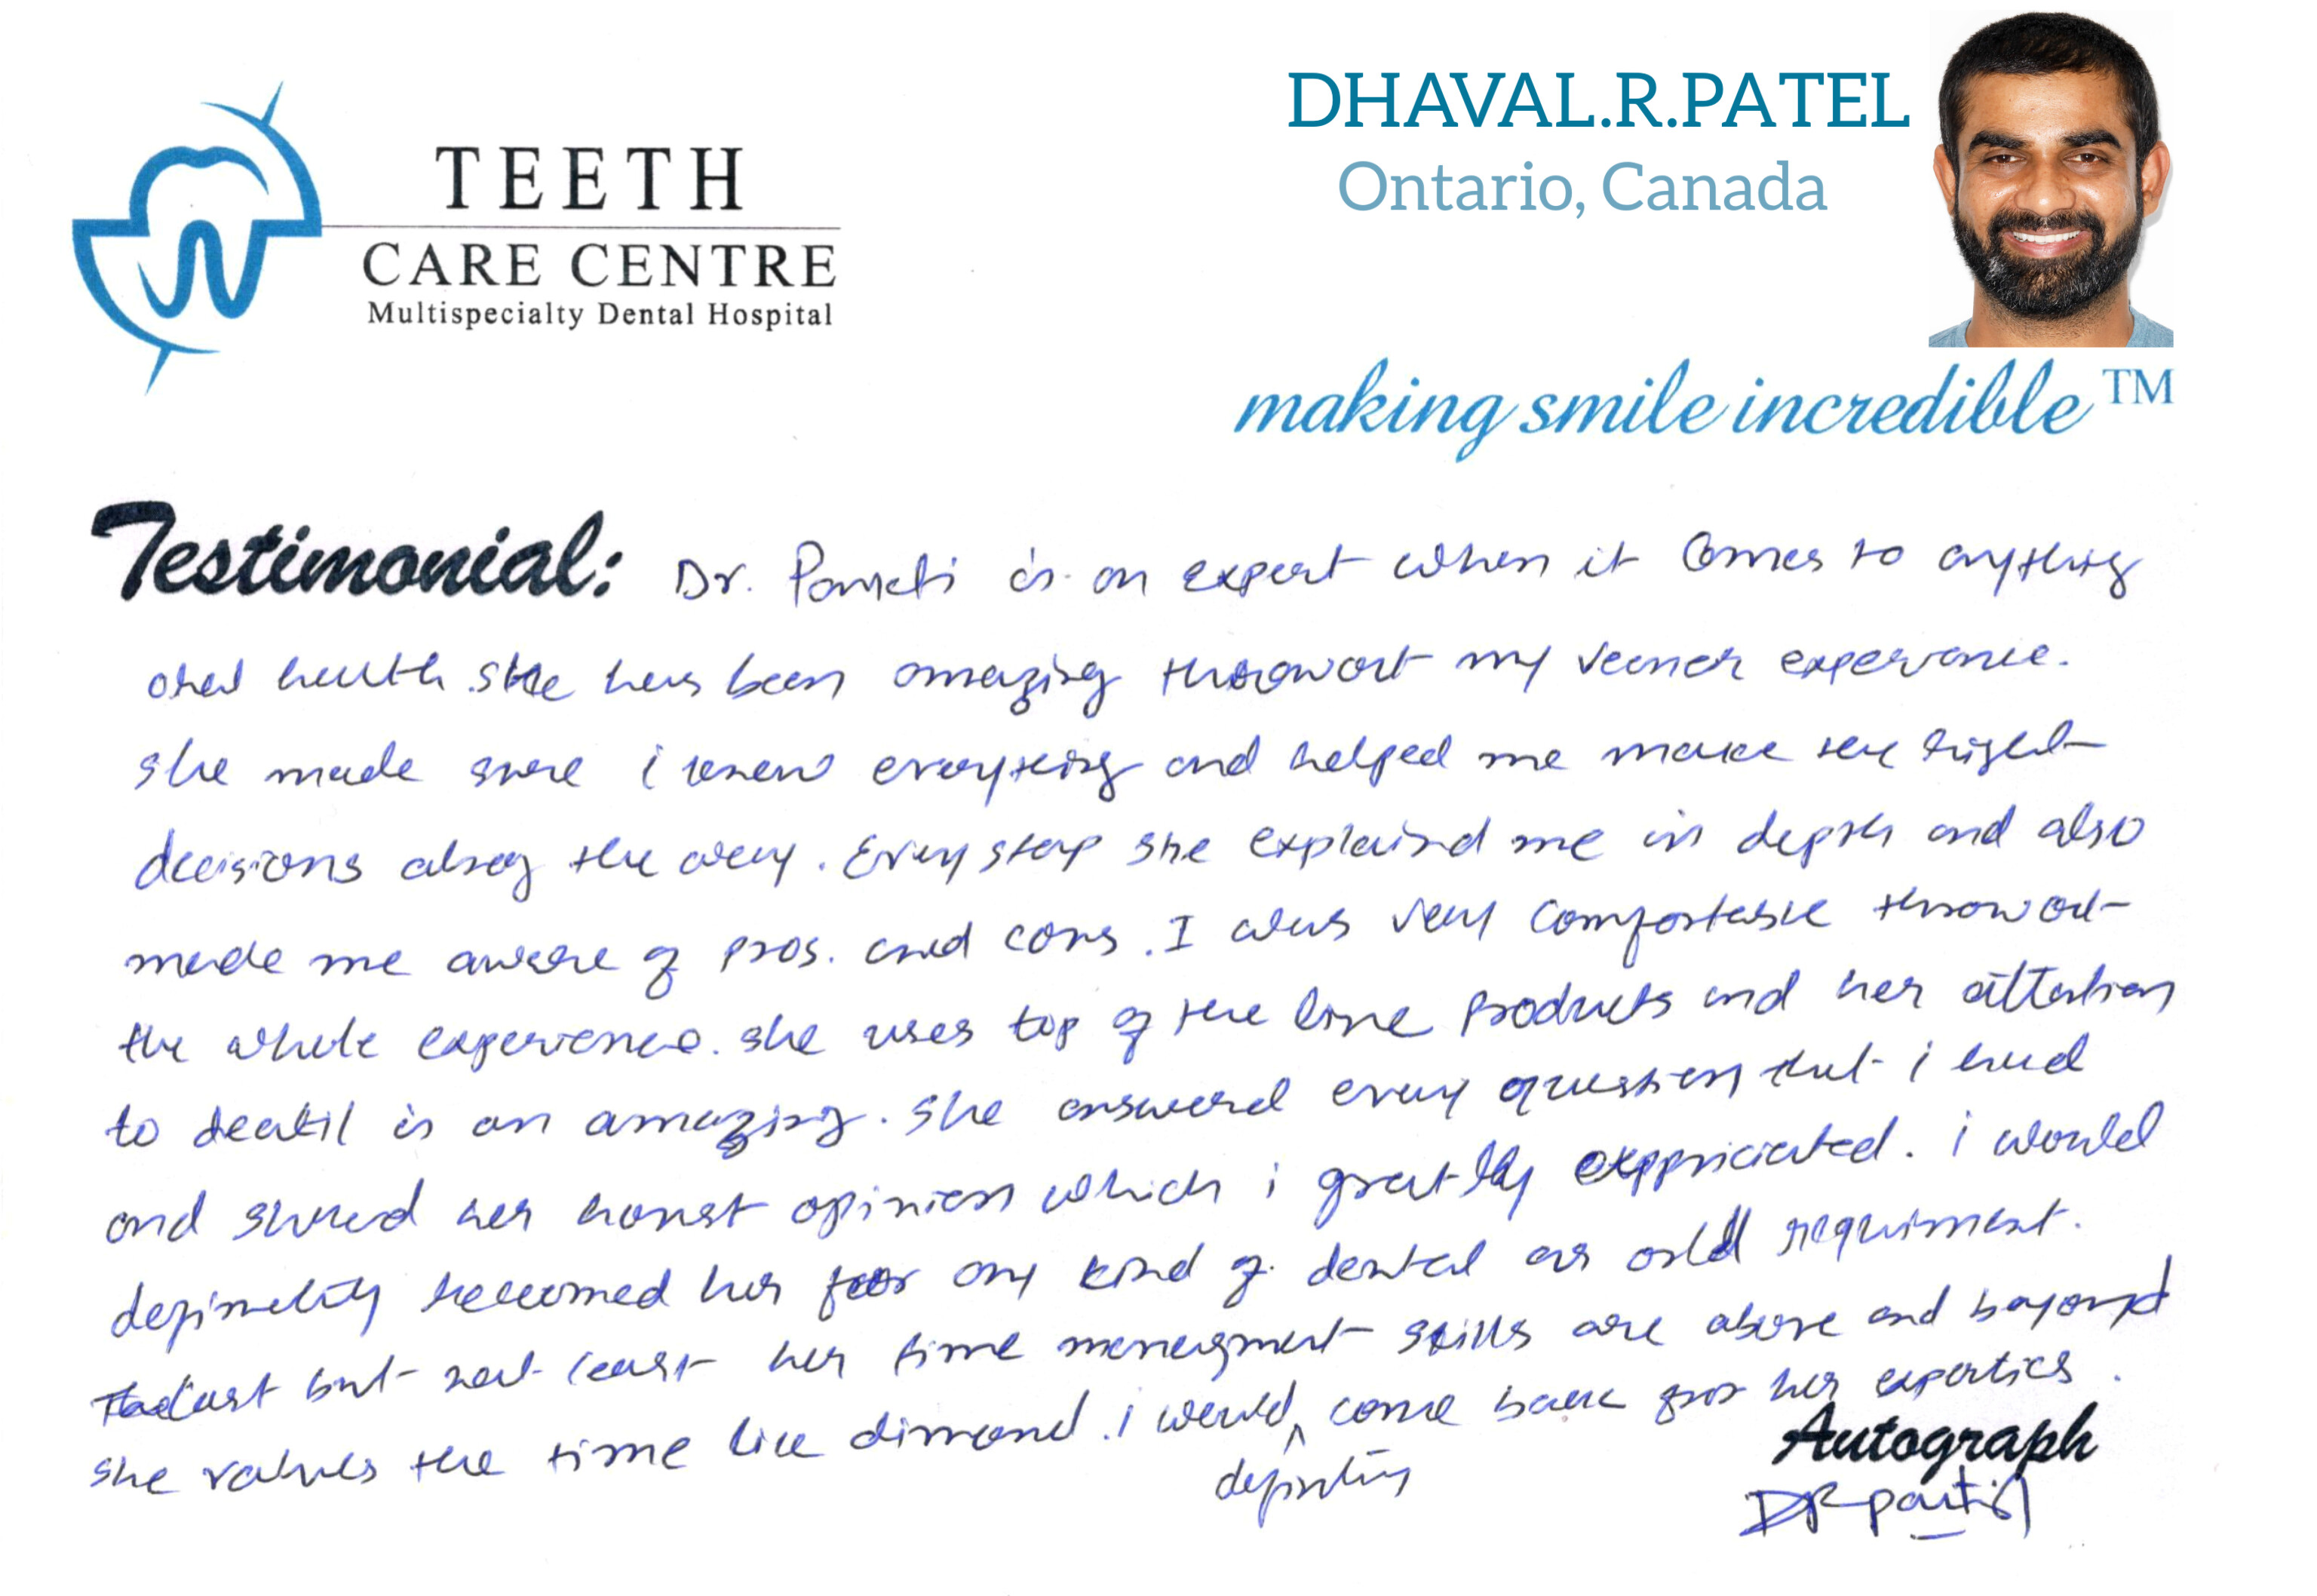 cosmetic dentist ahmedabad review testimonial best top porcelain veneer india abroad treatment emax